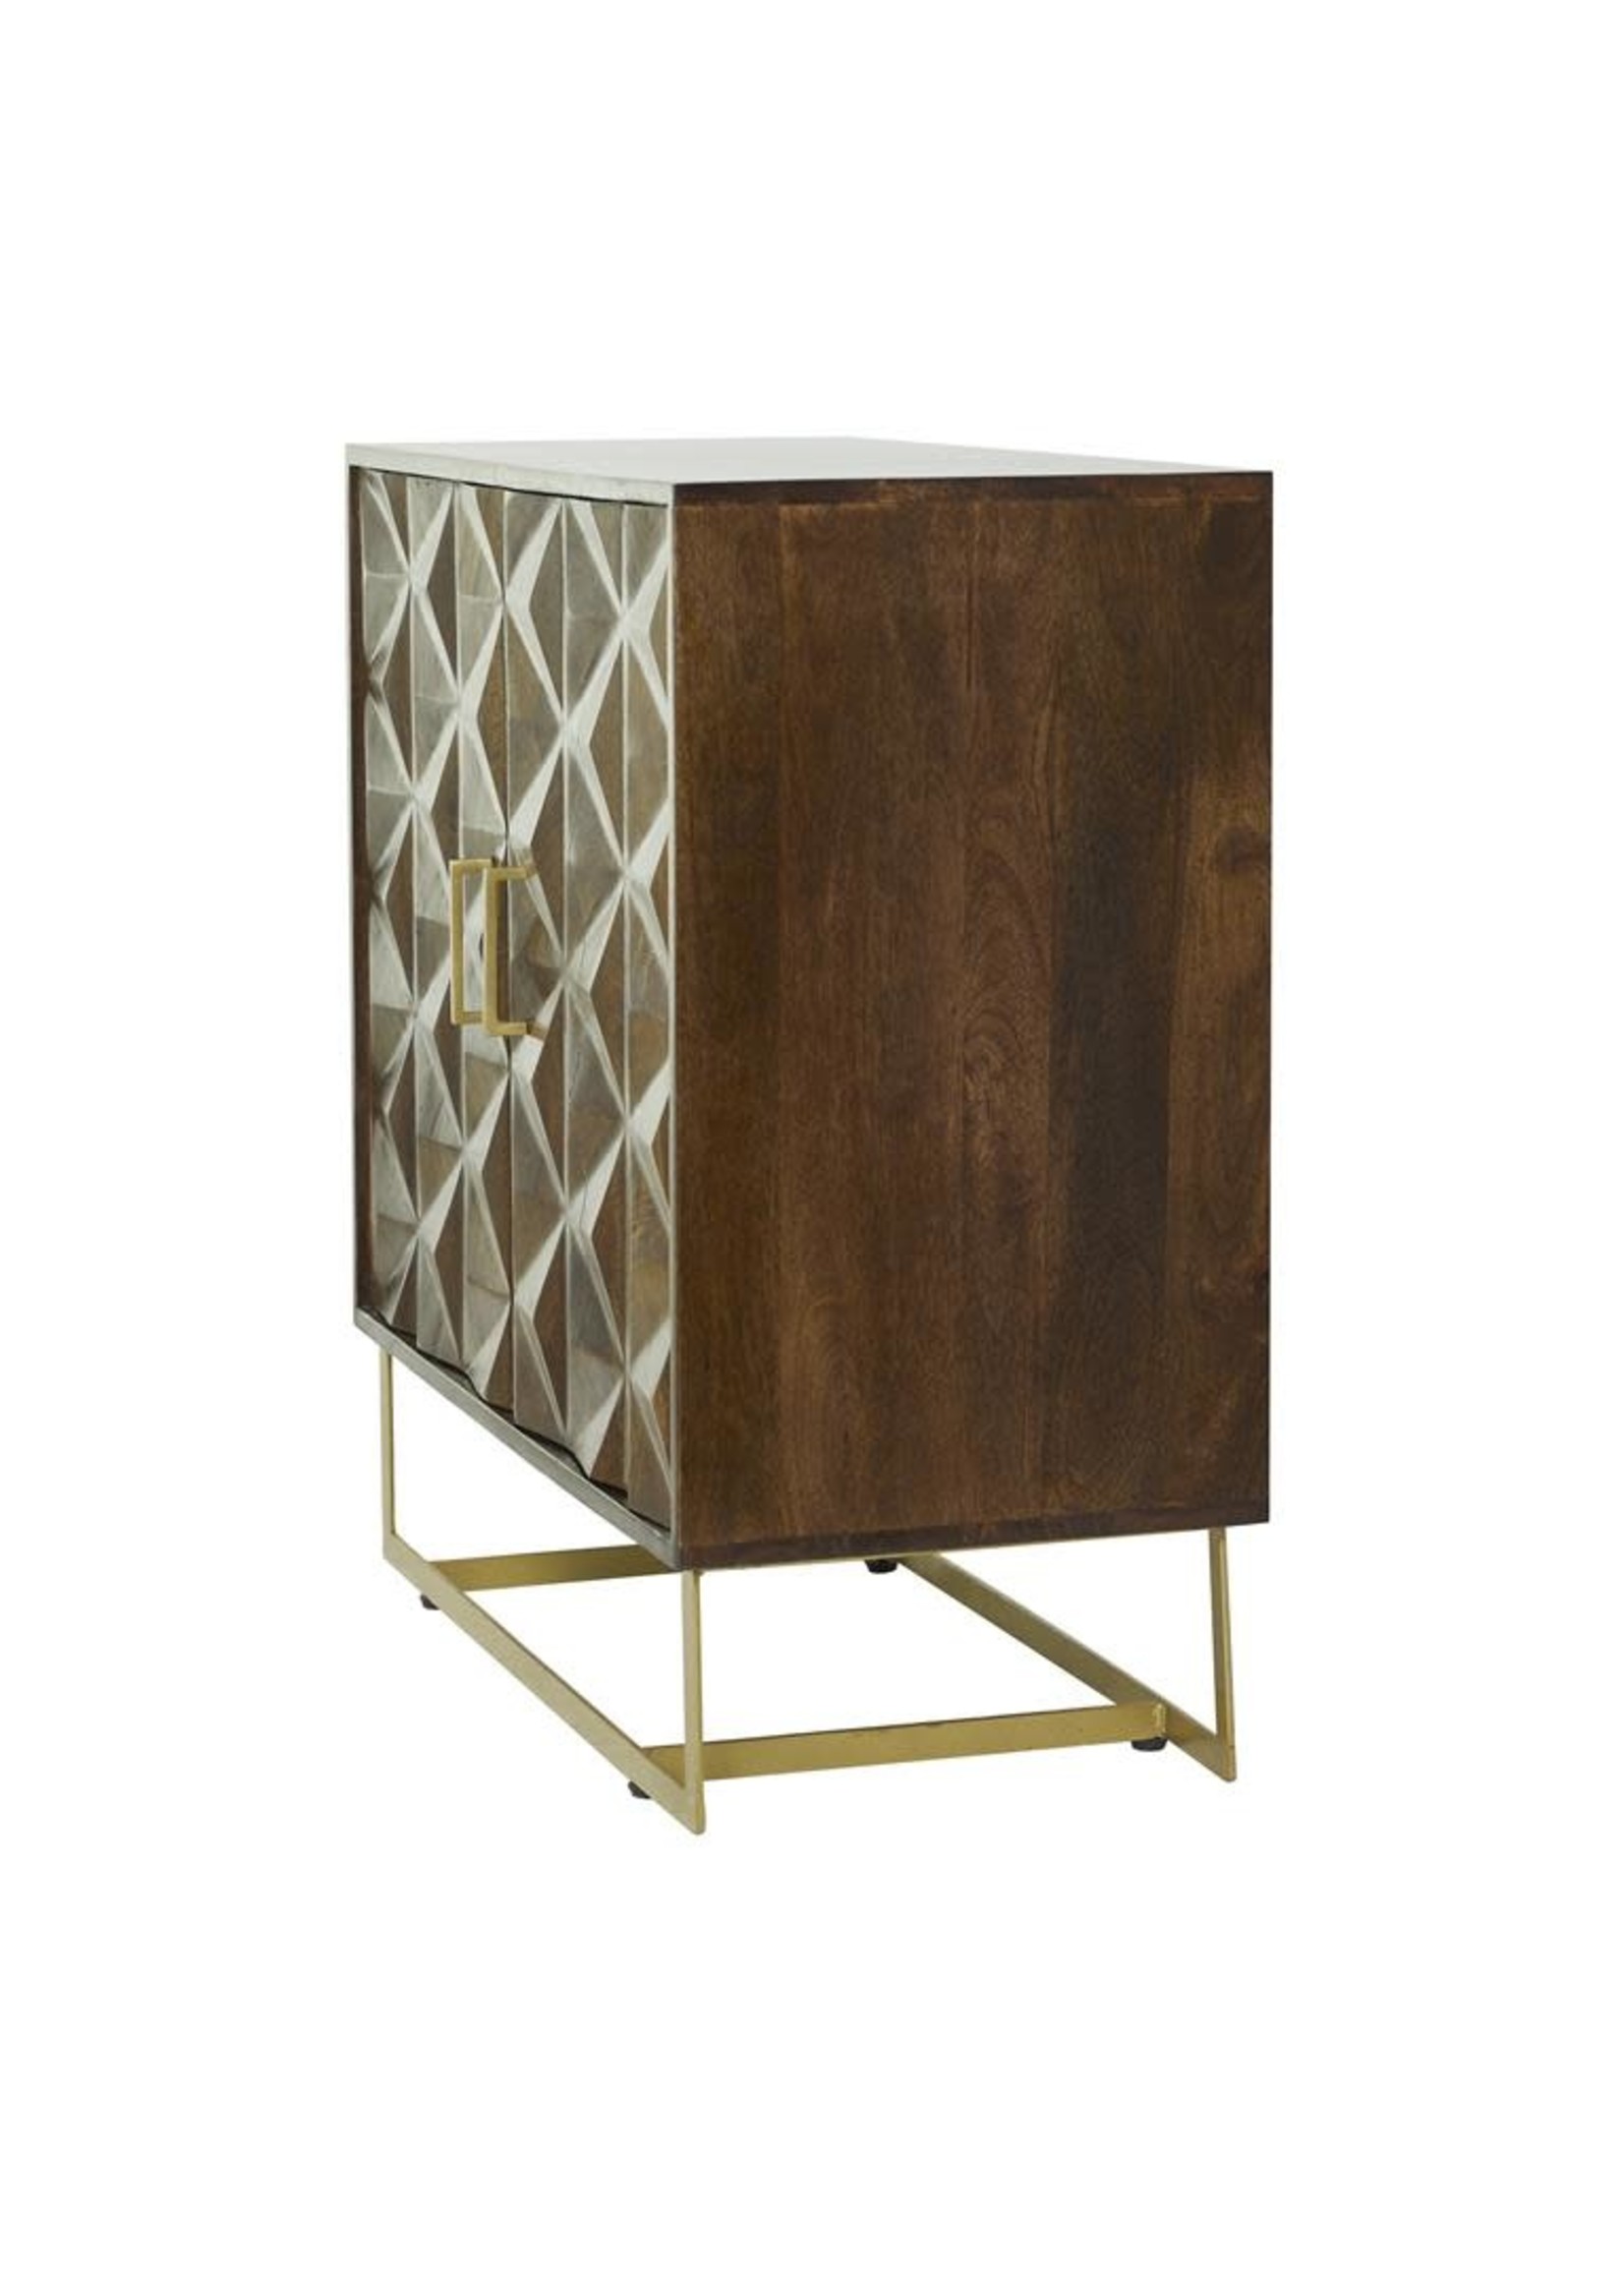 UMA Enterprises 80616 Brown Wood Contemporary Cabinet, 34x 34x 16